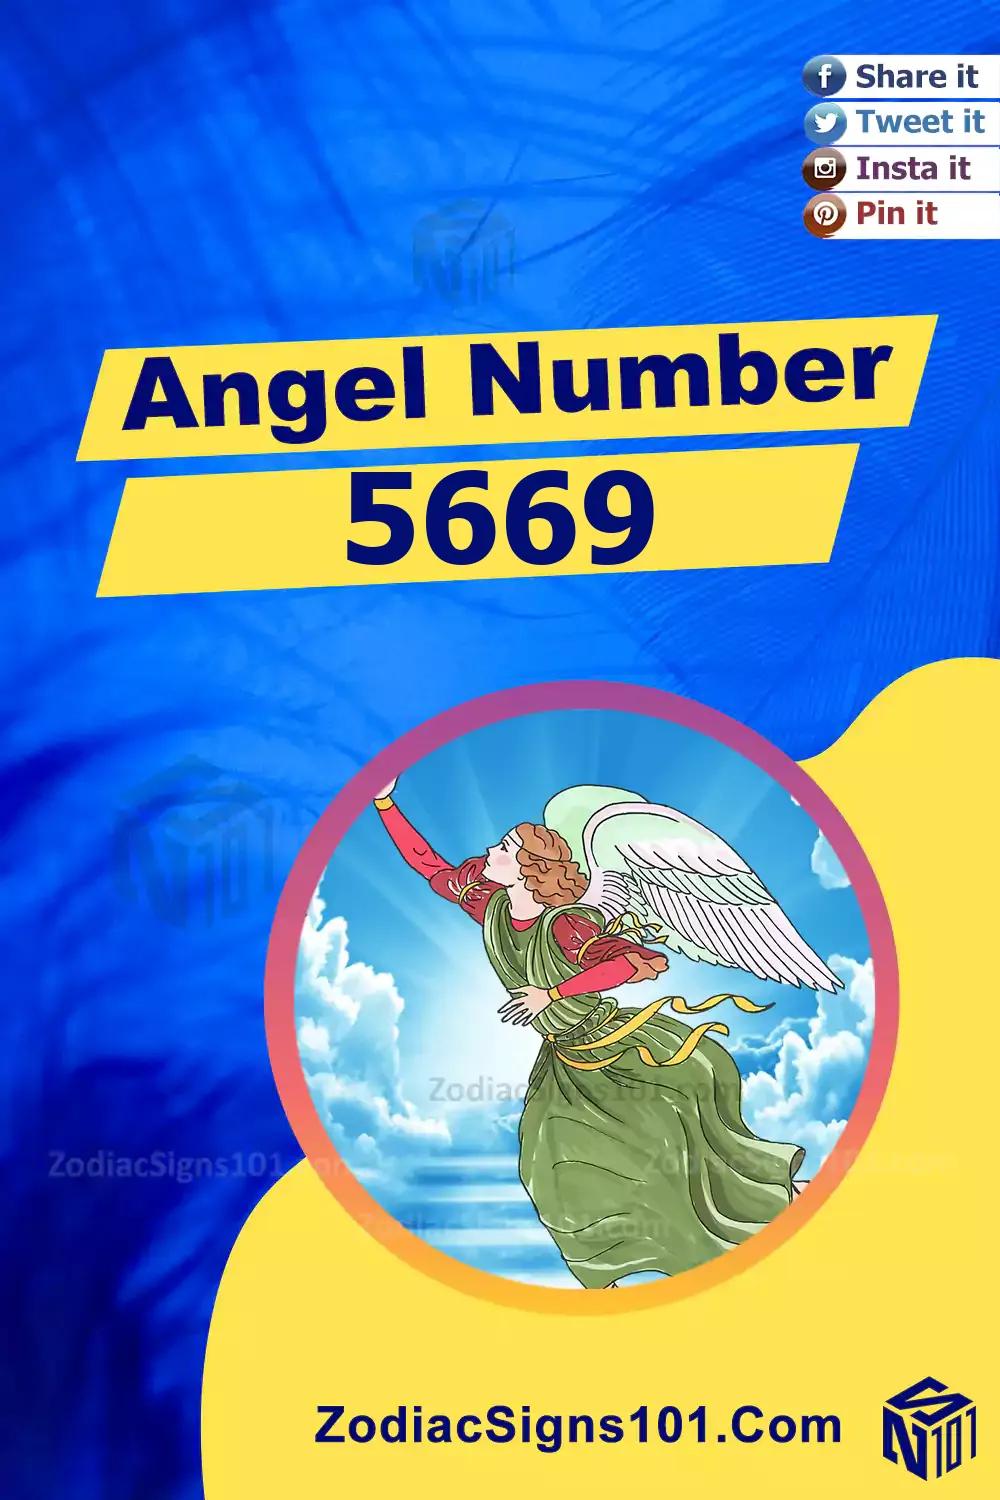 5669-Angel-Number-Meaning.jpg